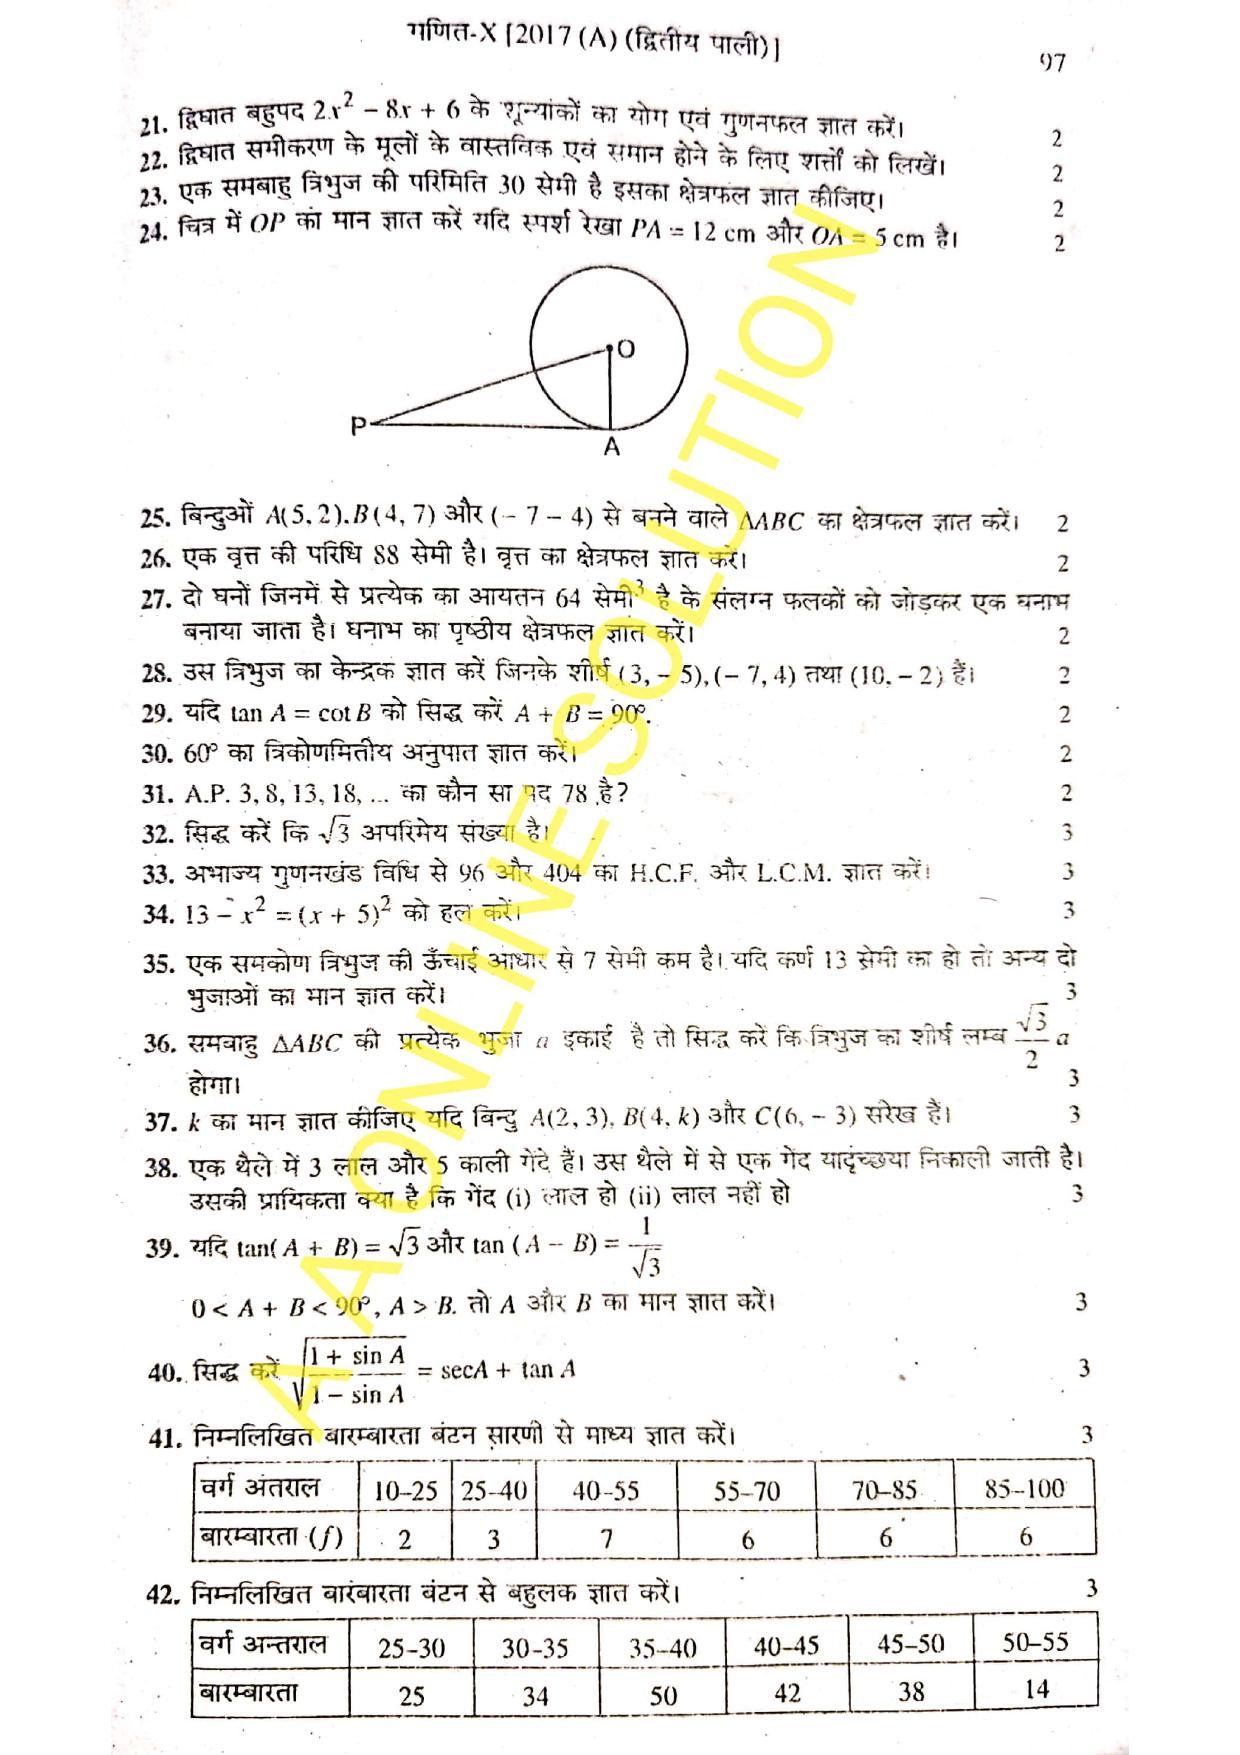 Bihar Board Class 10 Maths 2017 (2nd Sitting) Question Paper - Page 2